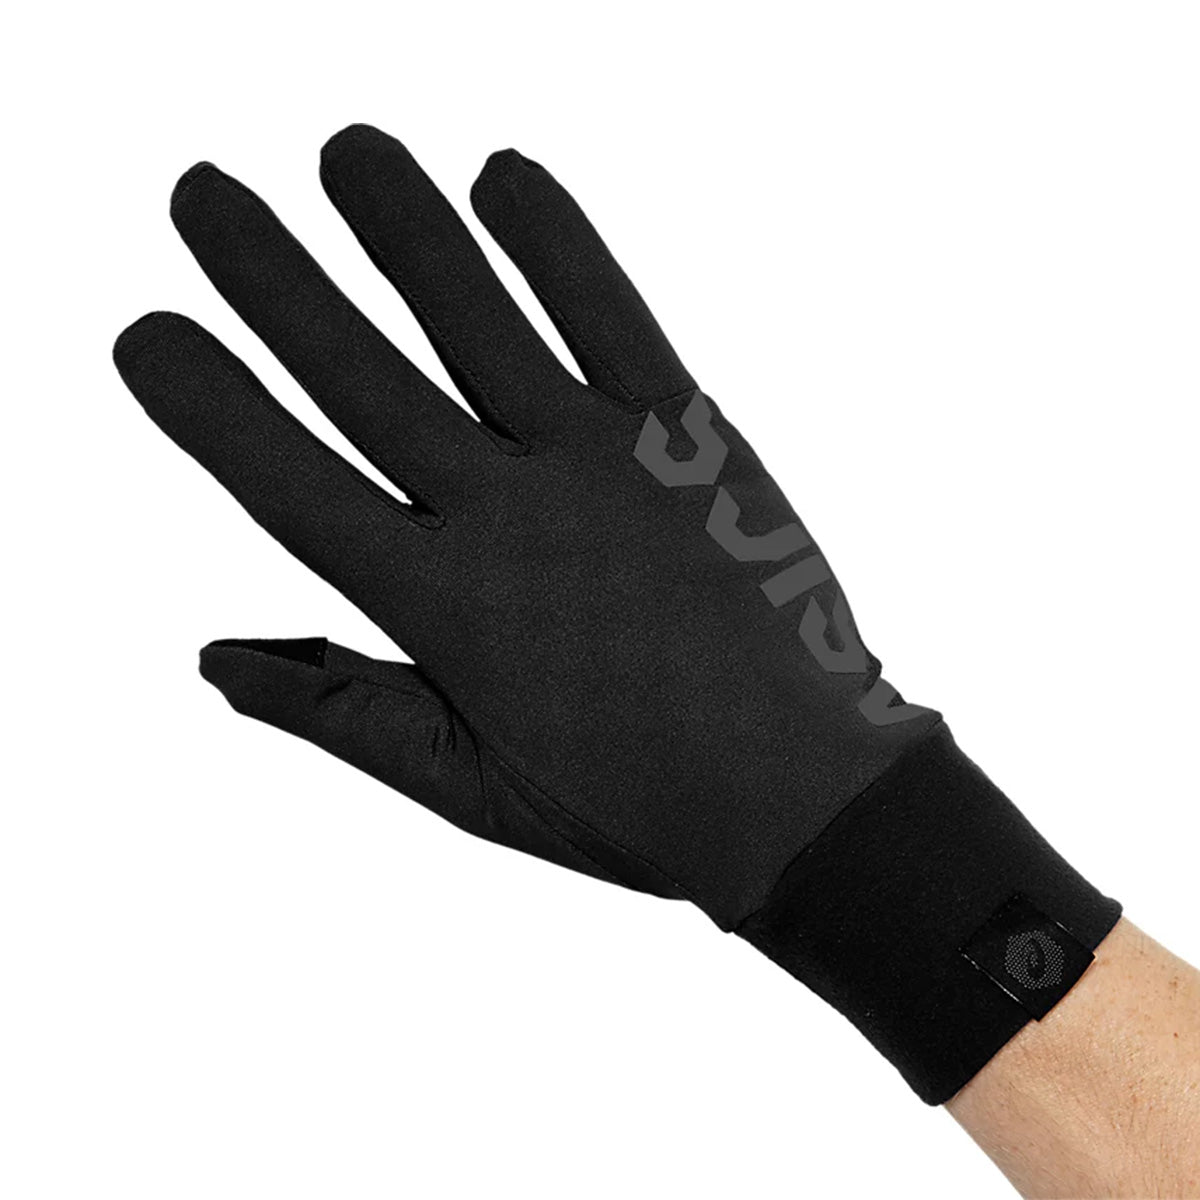 Asics Basic Gloves Performance Black כפפות אסיקס